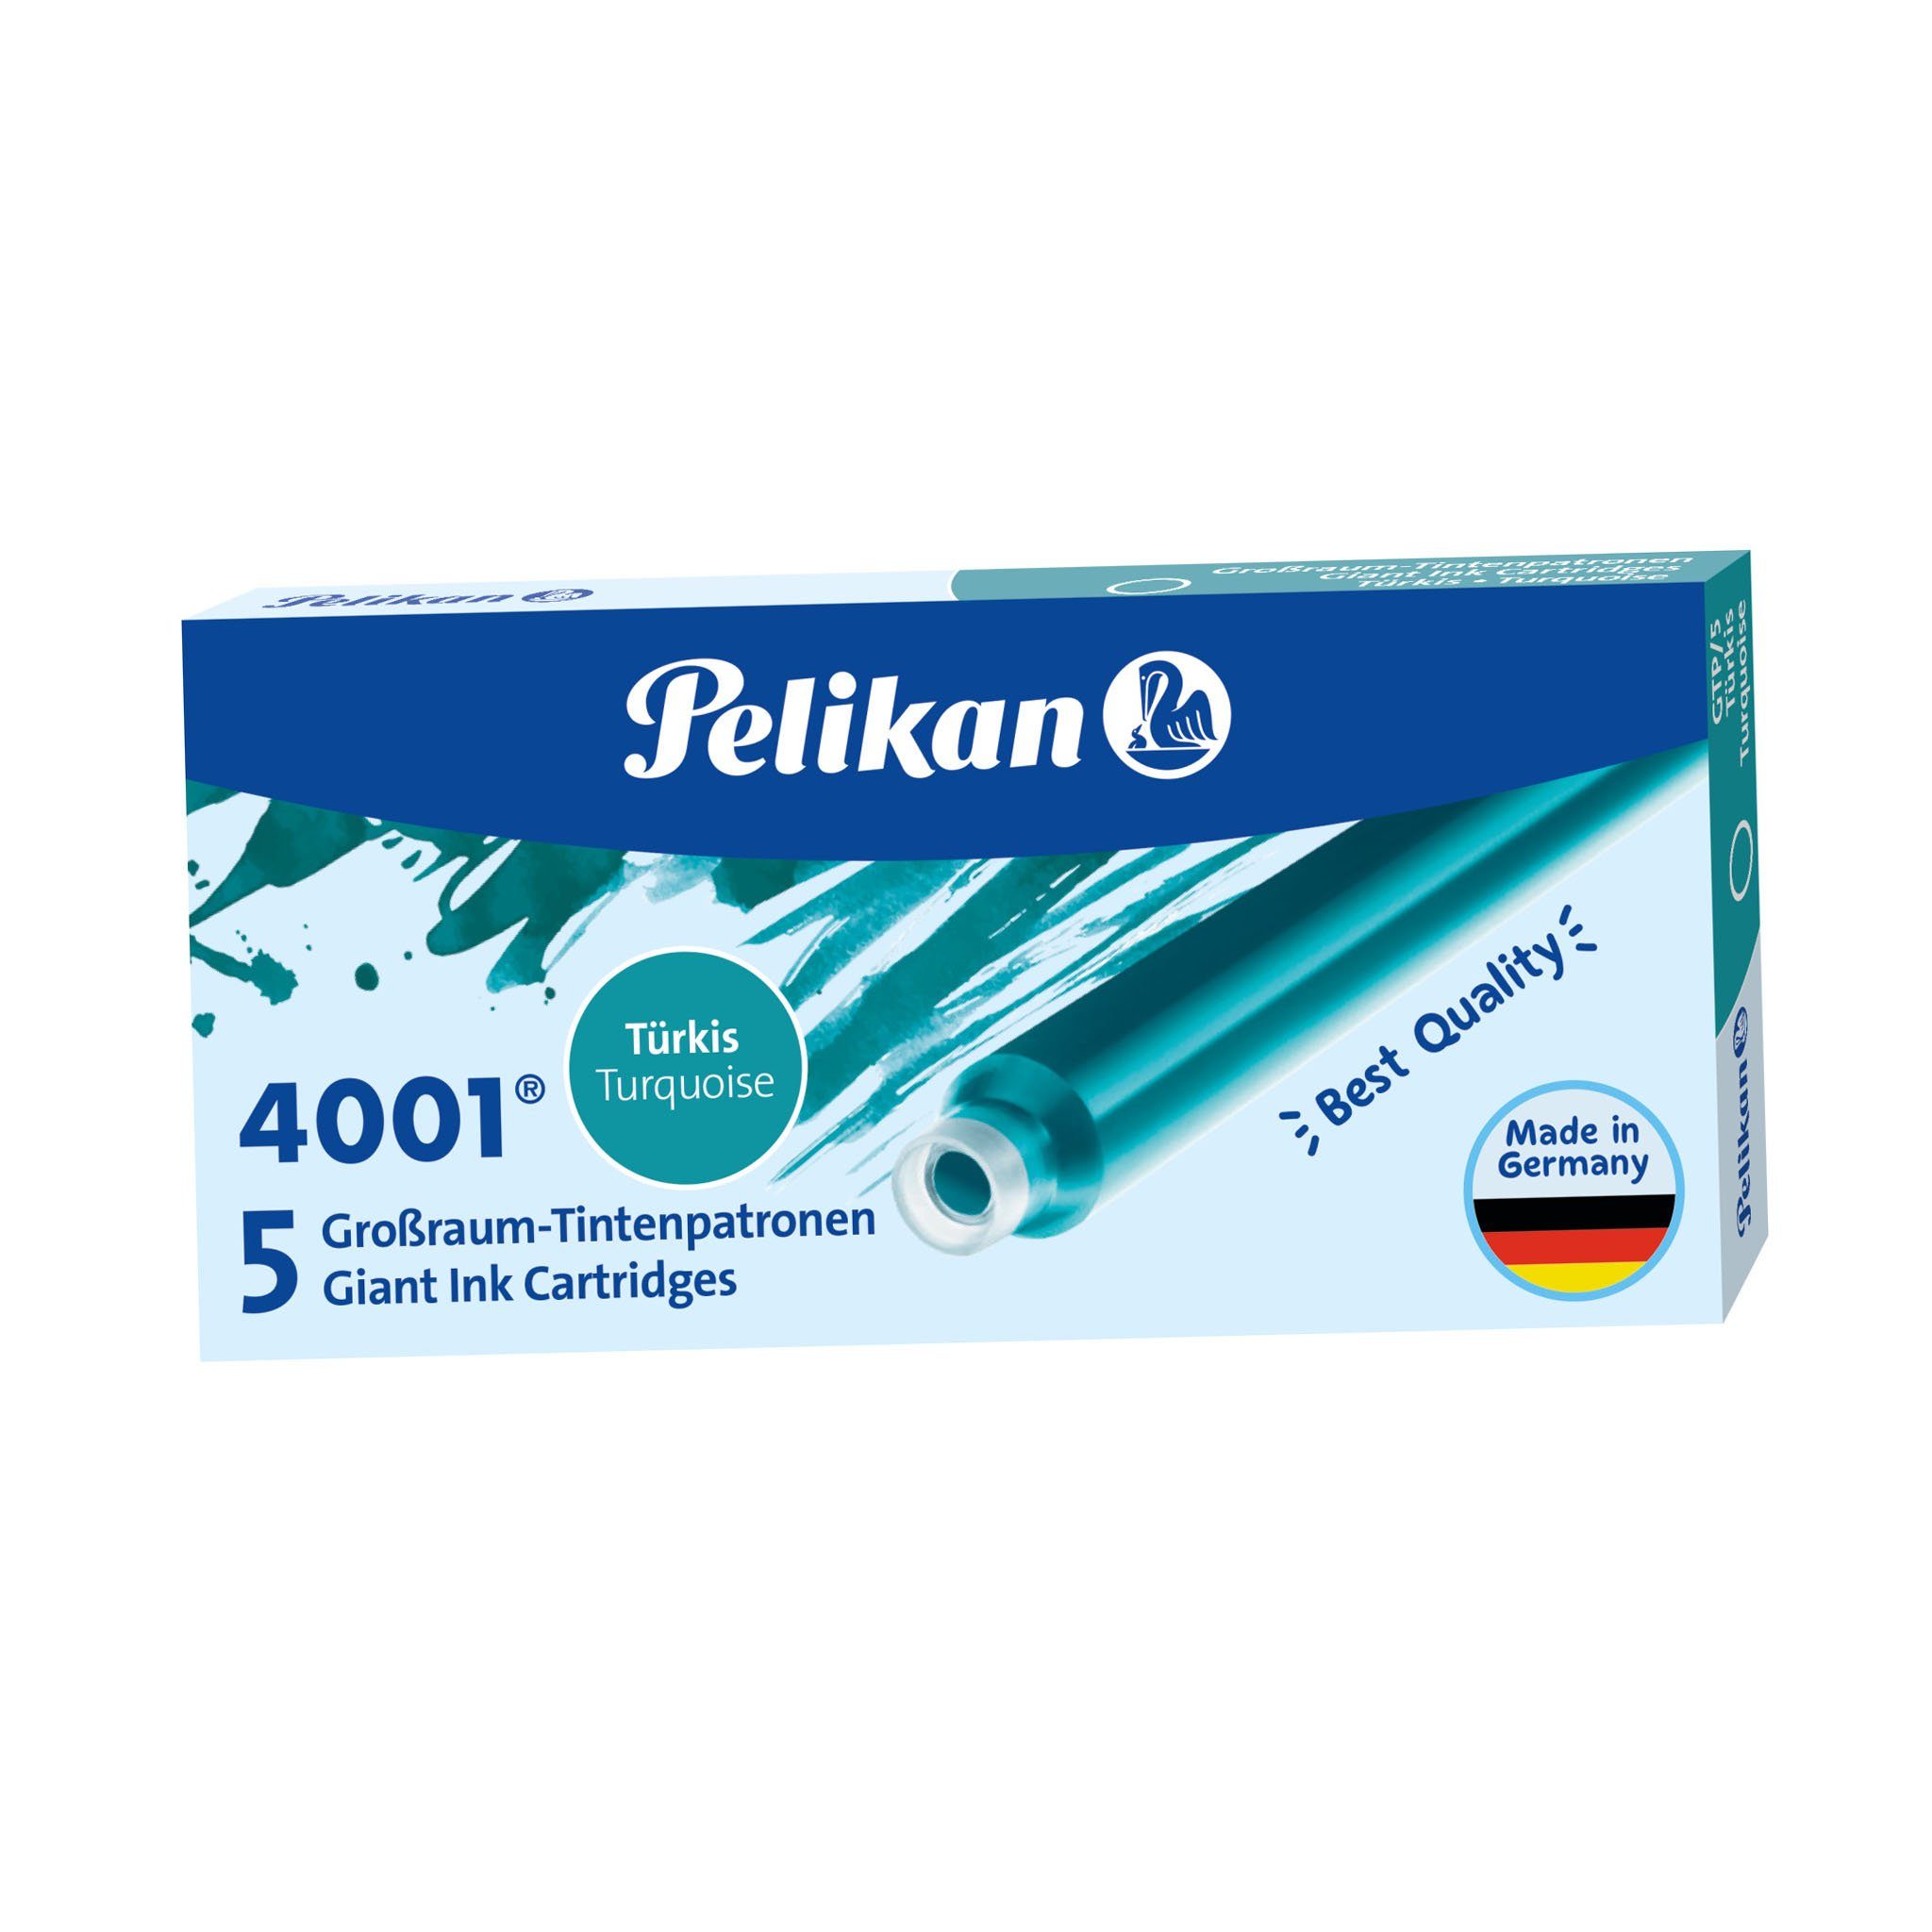 türkis Pelikan GTP/5, Füllfederhalter 4001 Pelikan Großraum-Tintenpatronen